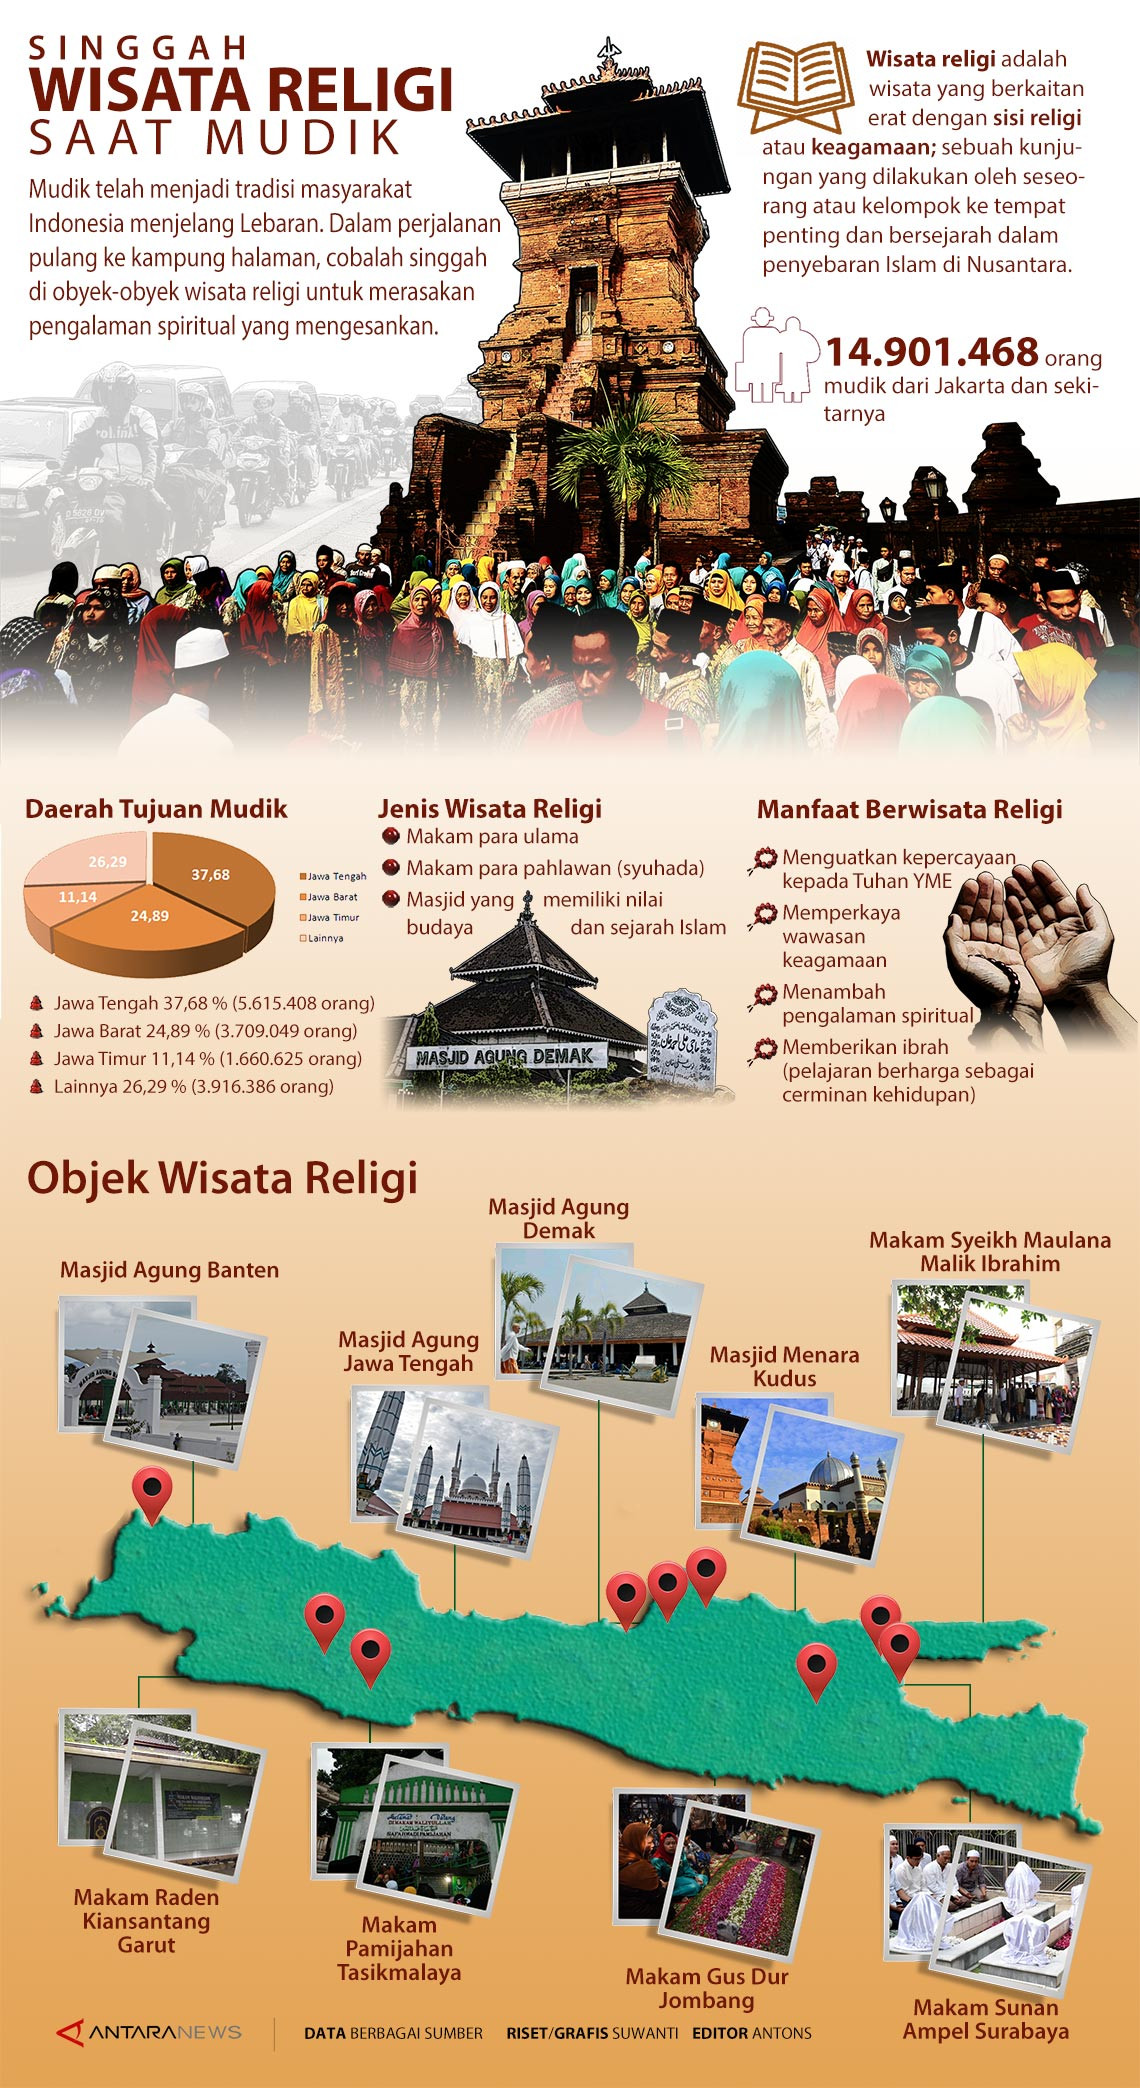 Infografik Singgah wisata religi saat mudik - ANTARA News